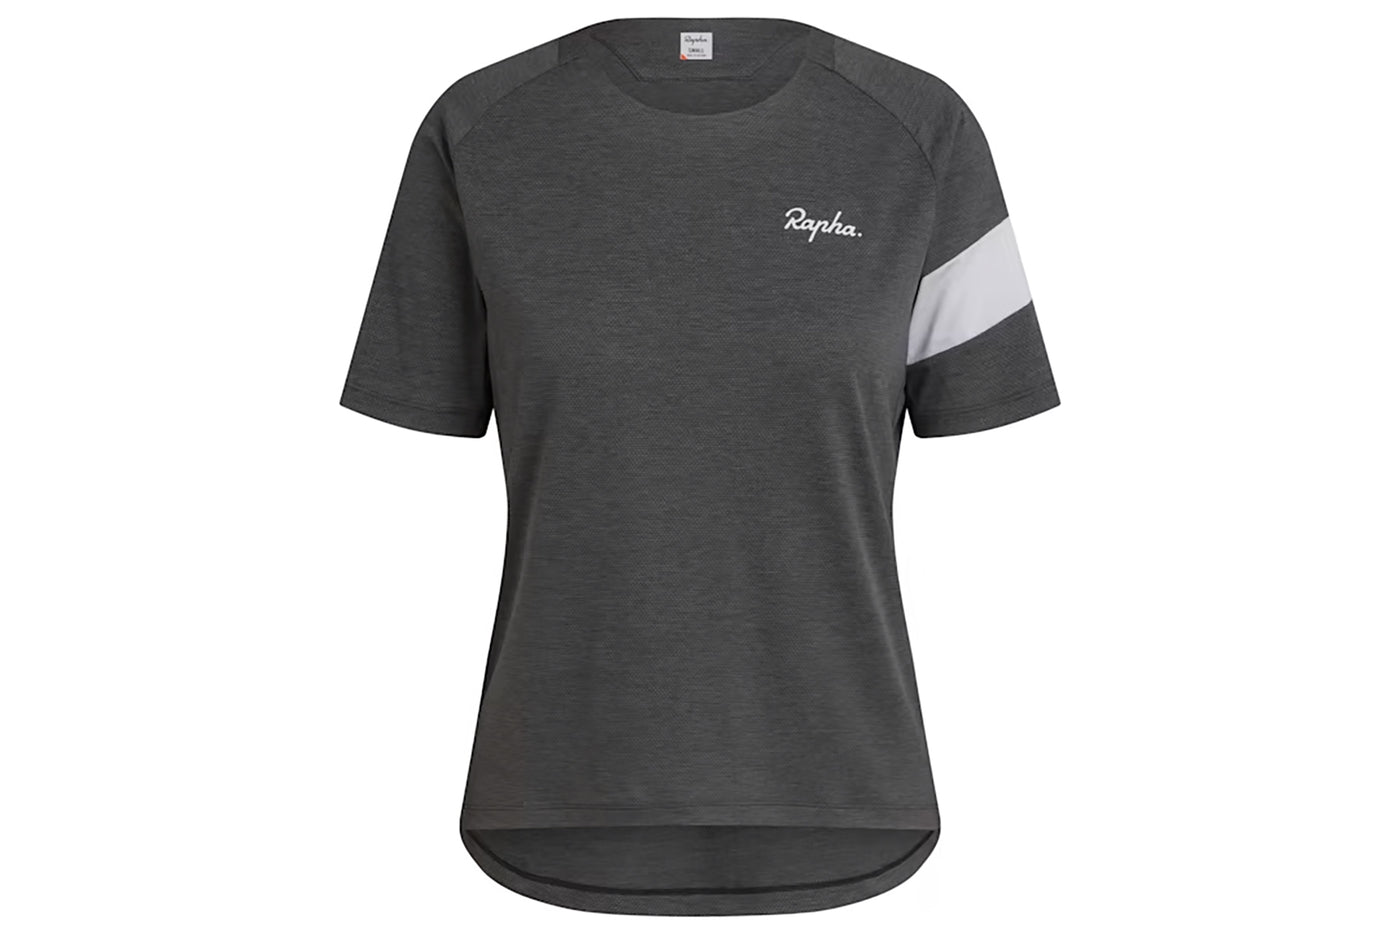 Trail Technical T-Shirt (Women's)